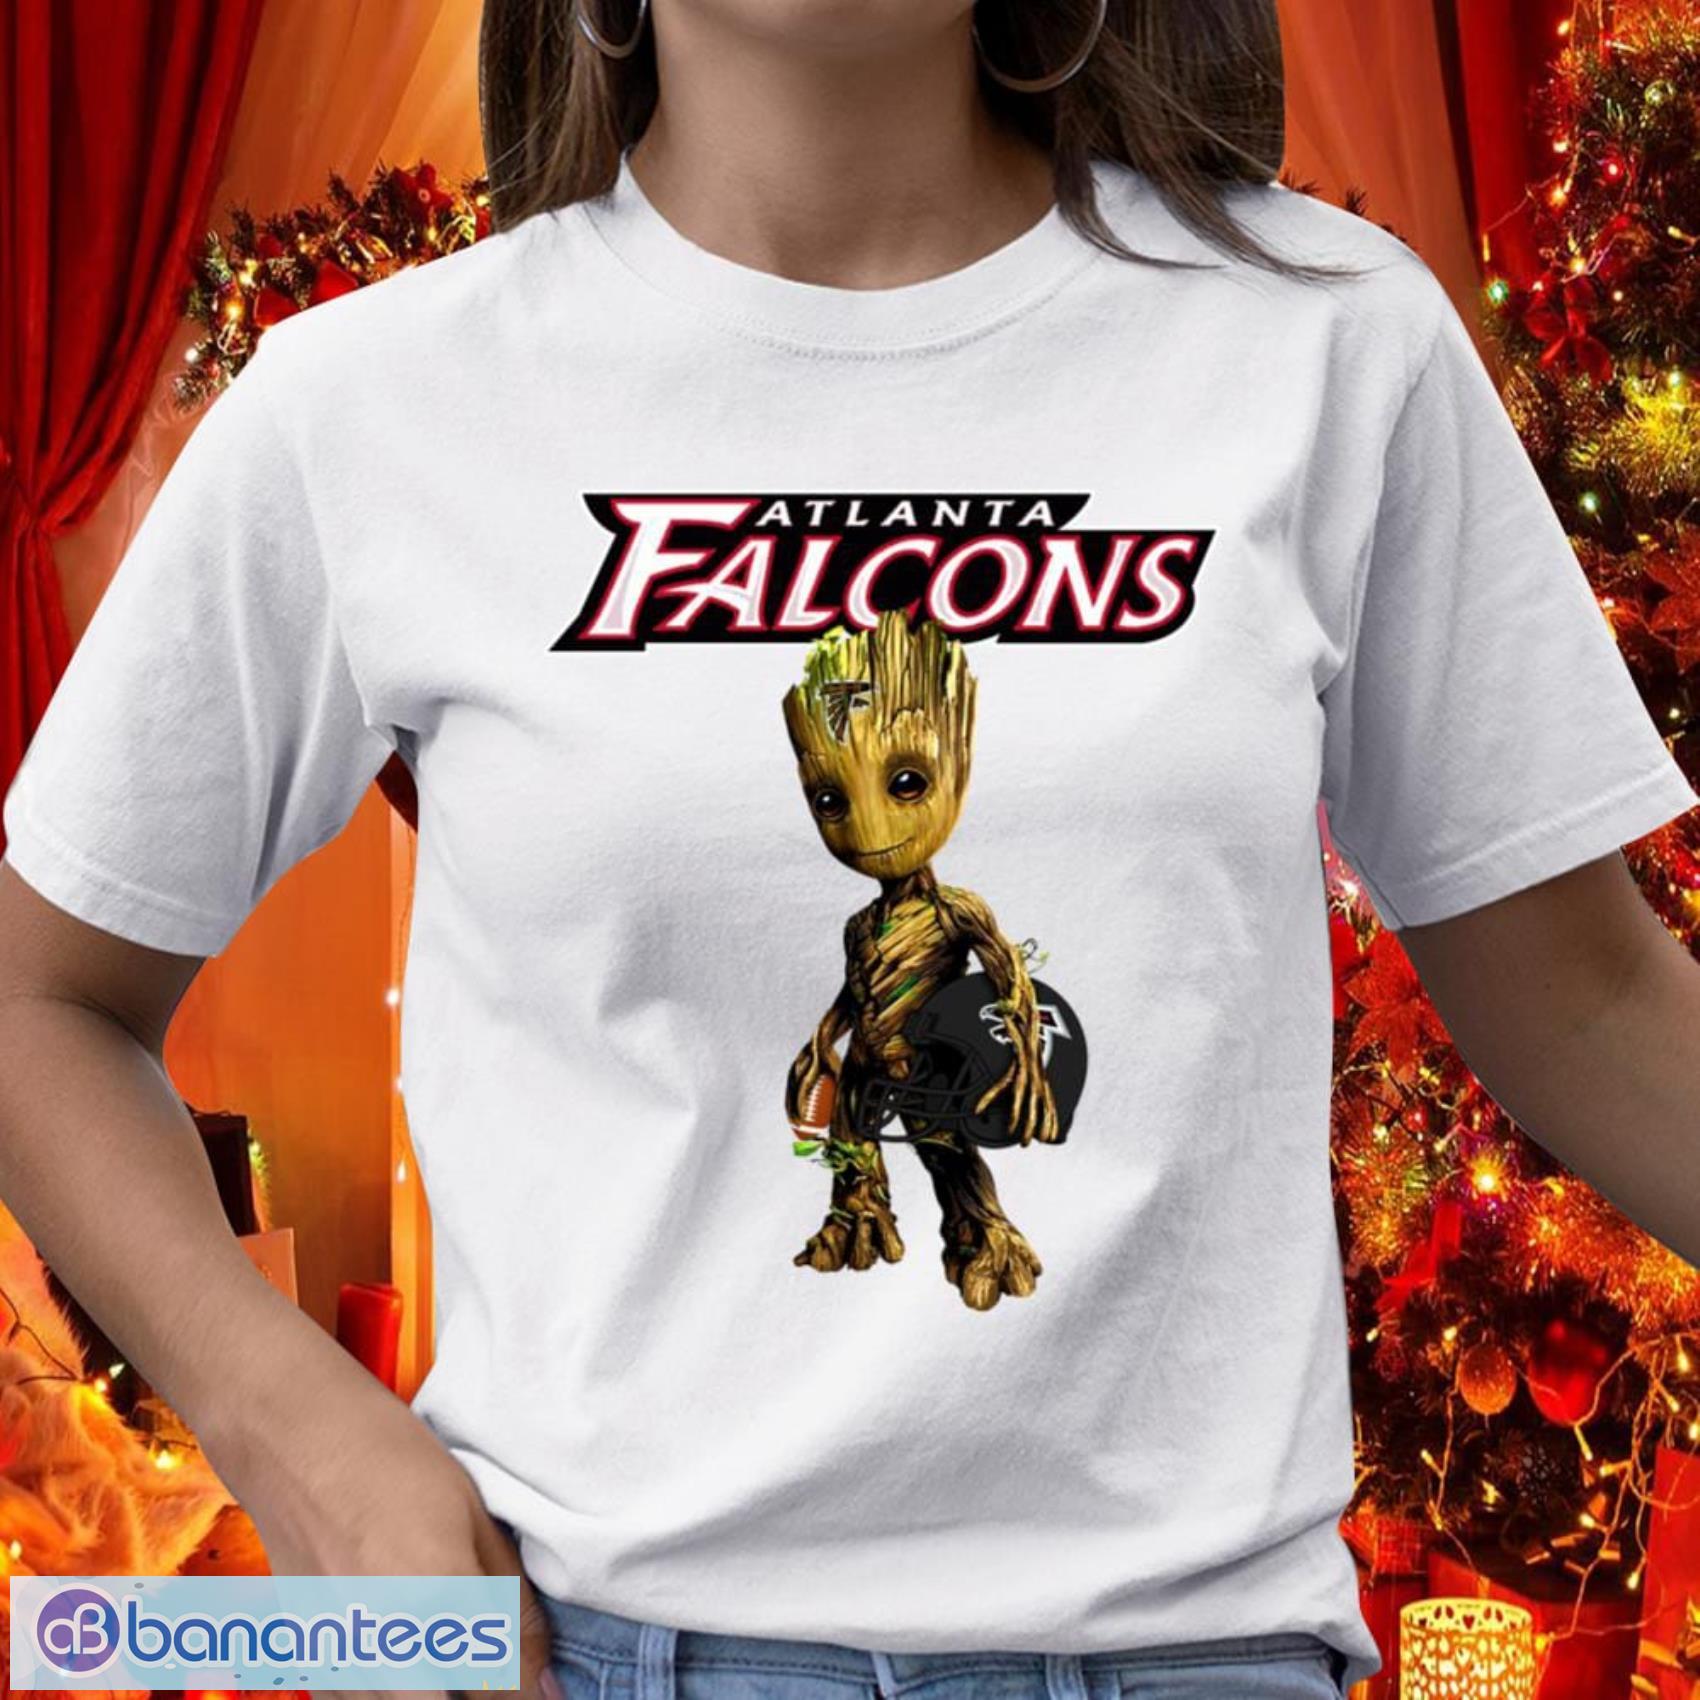 Atlanta Falcons NFL Football Gift Fr Fans Groot Marvel Guardians Of The Galaxy T Shirt - Atlanta Falcons NFL Football Groot Marvel Guardians Of The Galaxy T Shirt_1